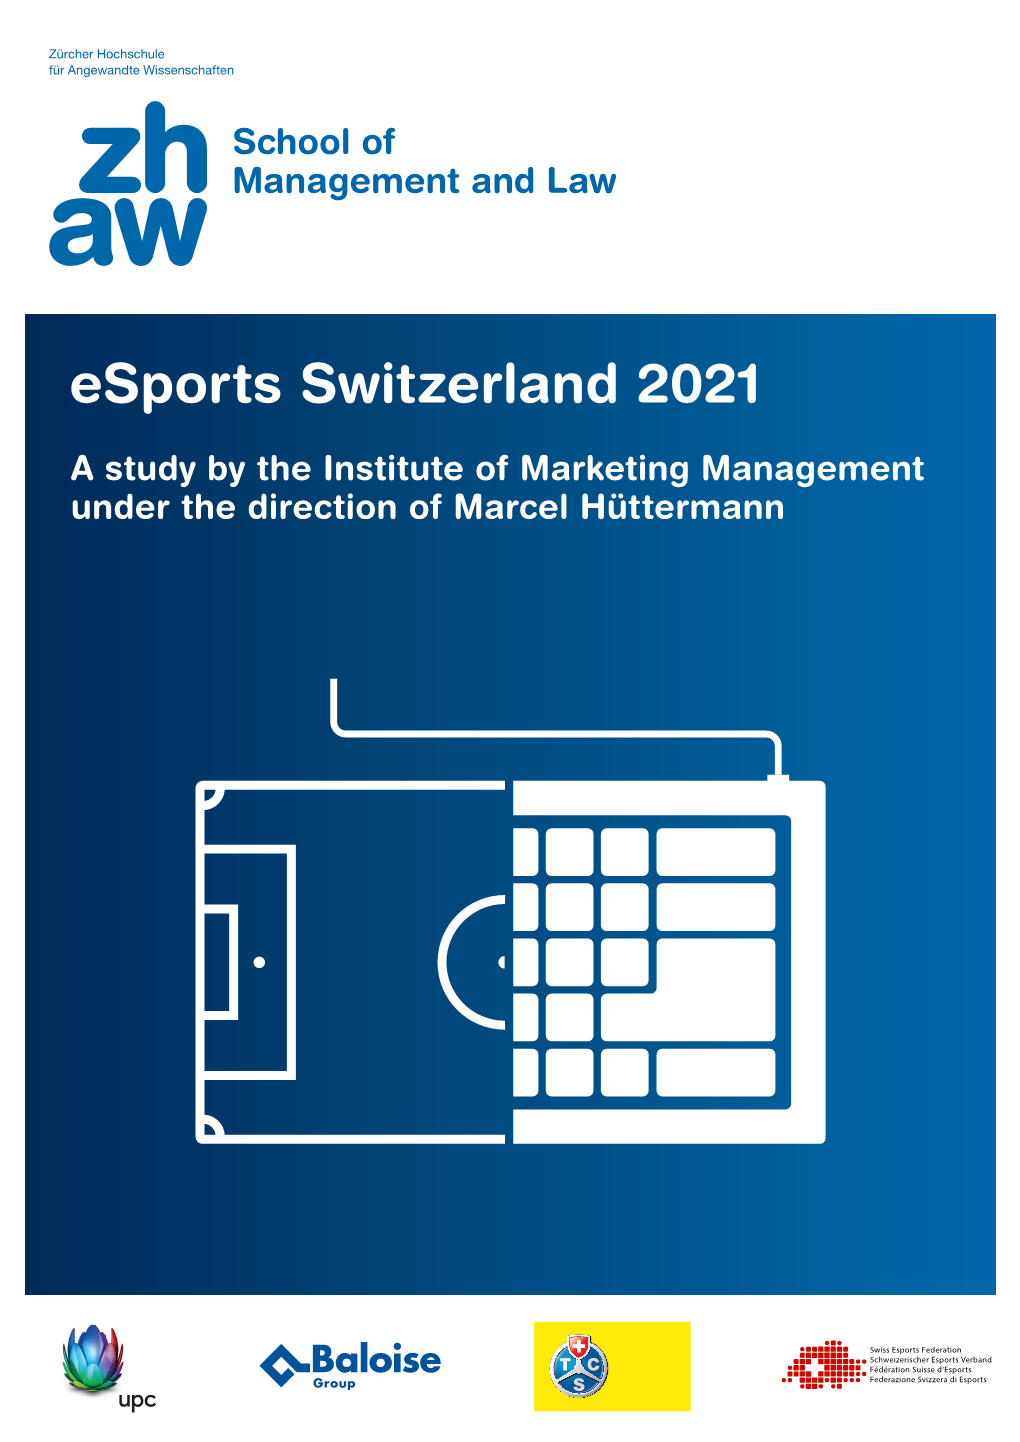 Esports Switzerland 2021 Study